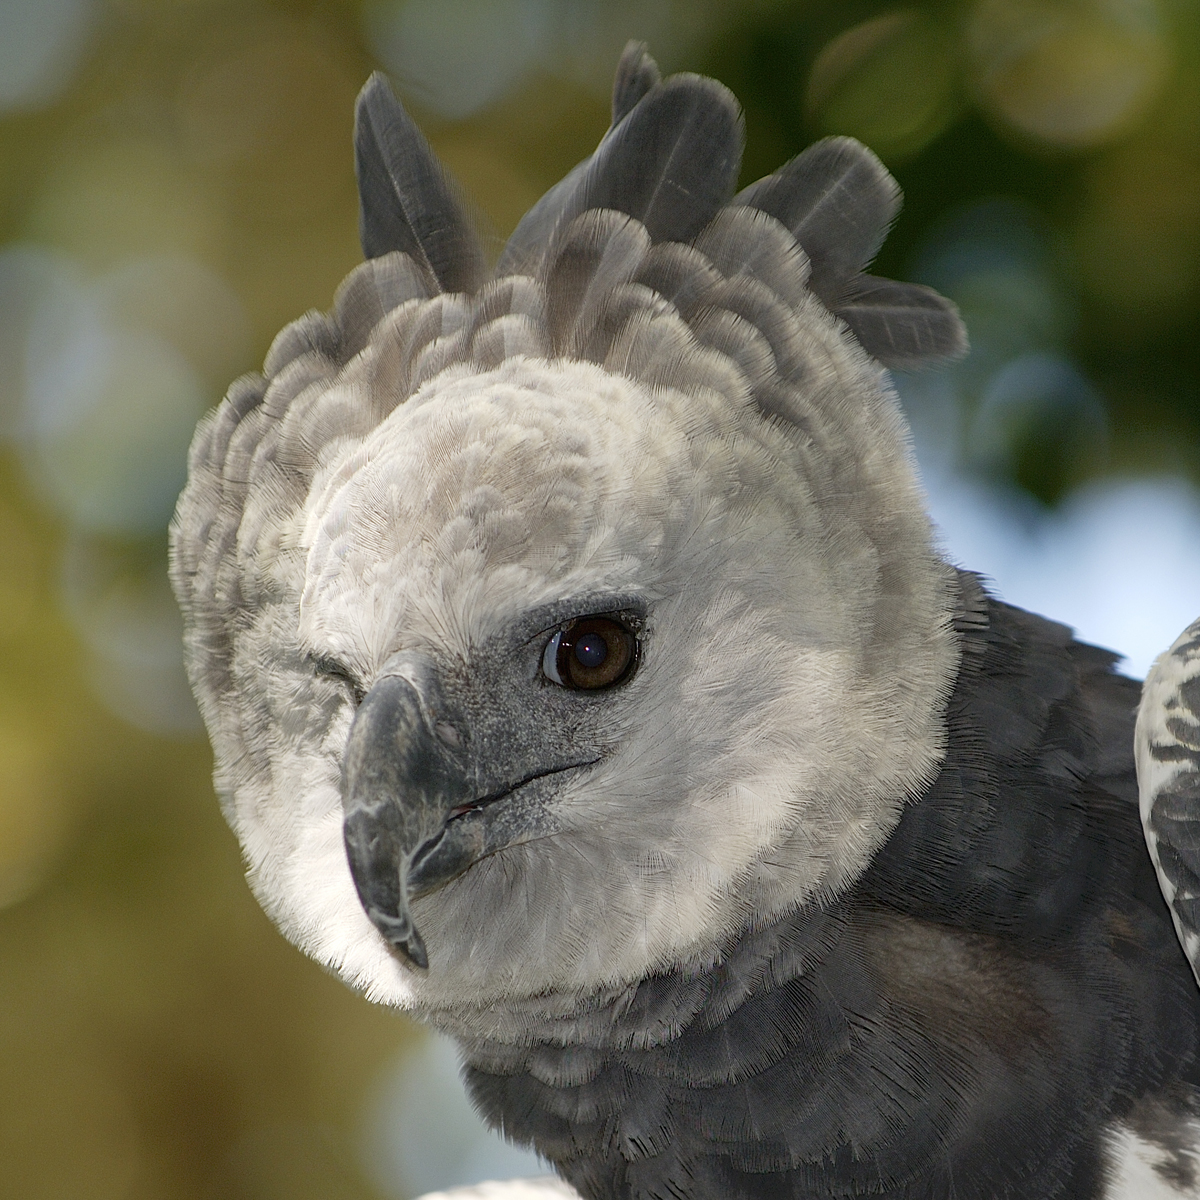 Factsheet: Harpy eagle (Harpia harpyja)